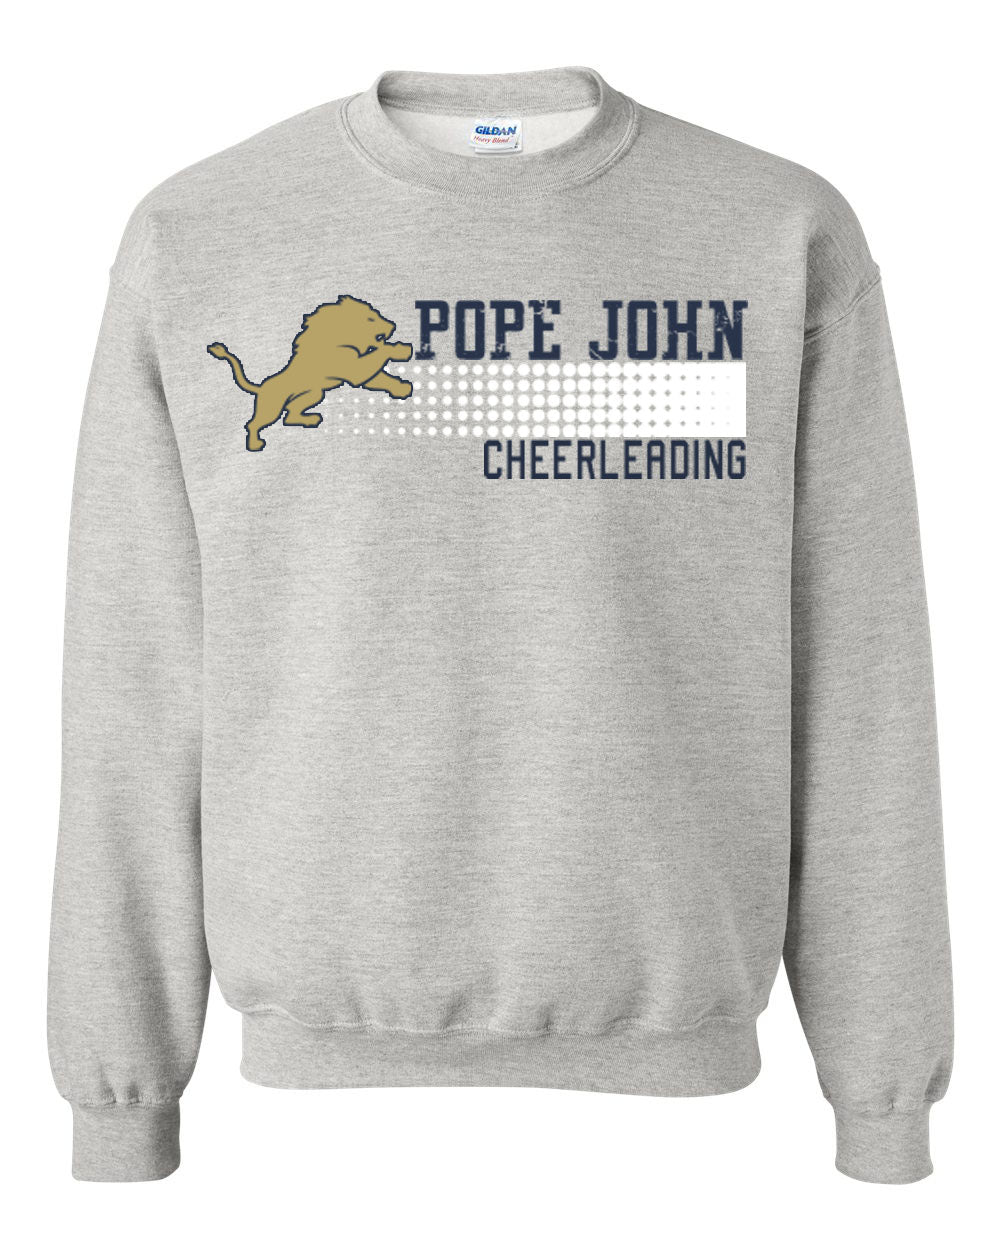 Pope John Cheer Design 4 non hooded sweatshirt